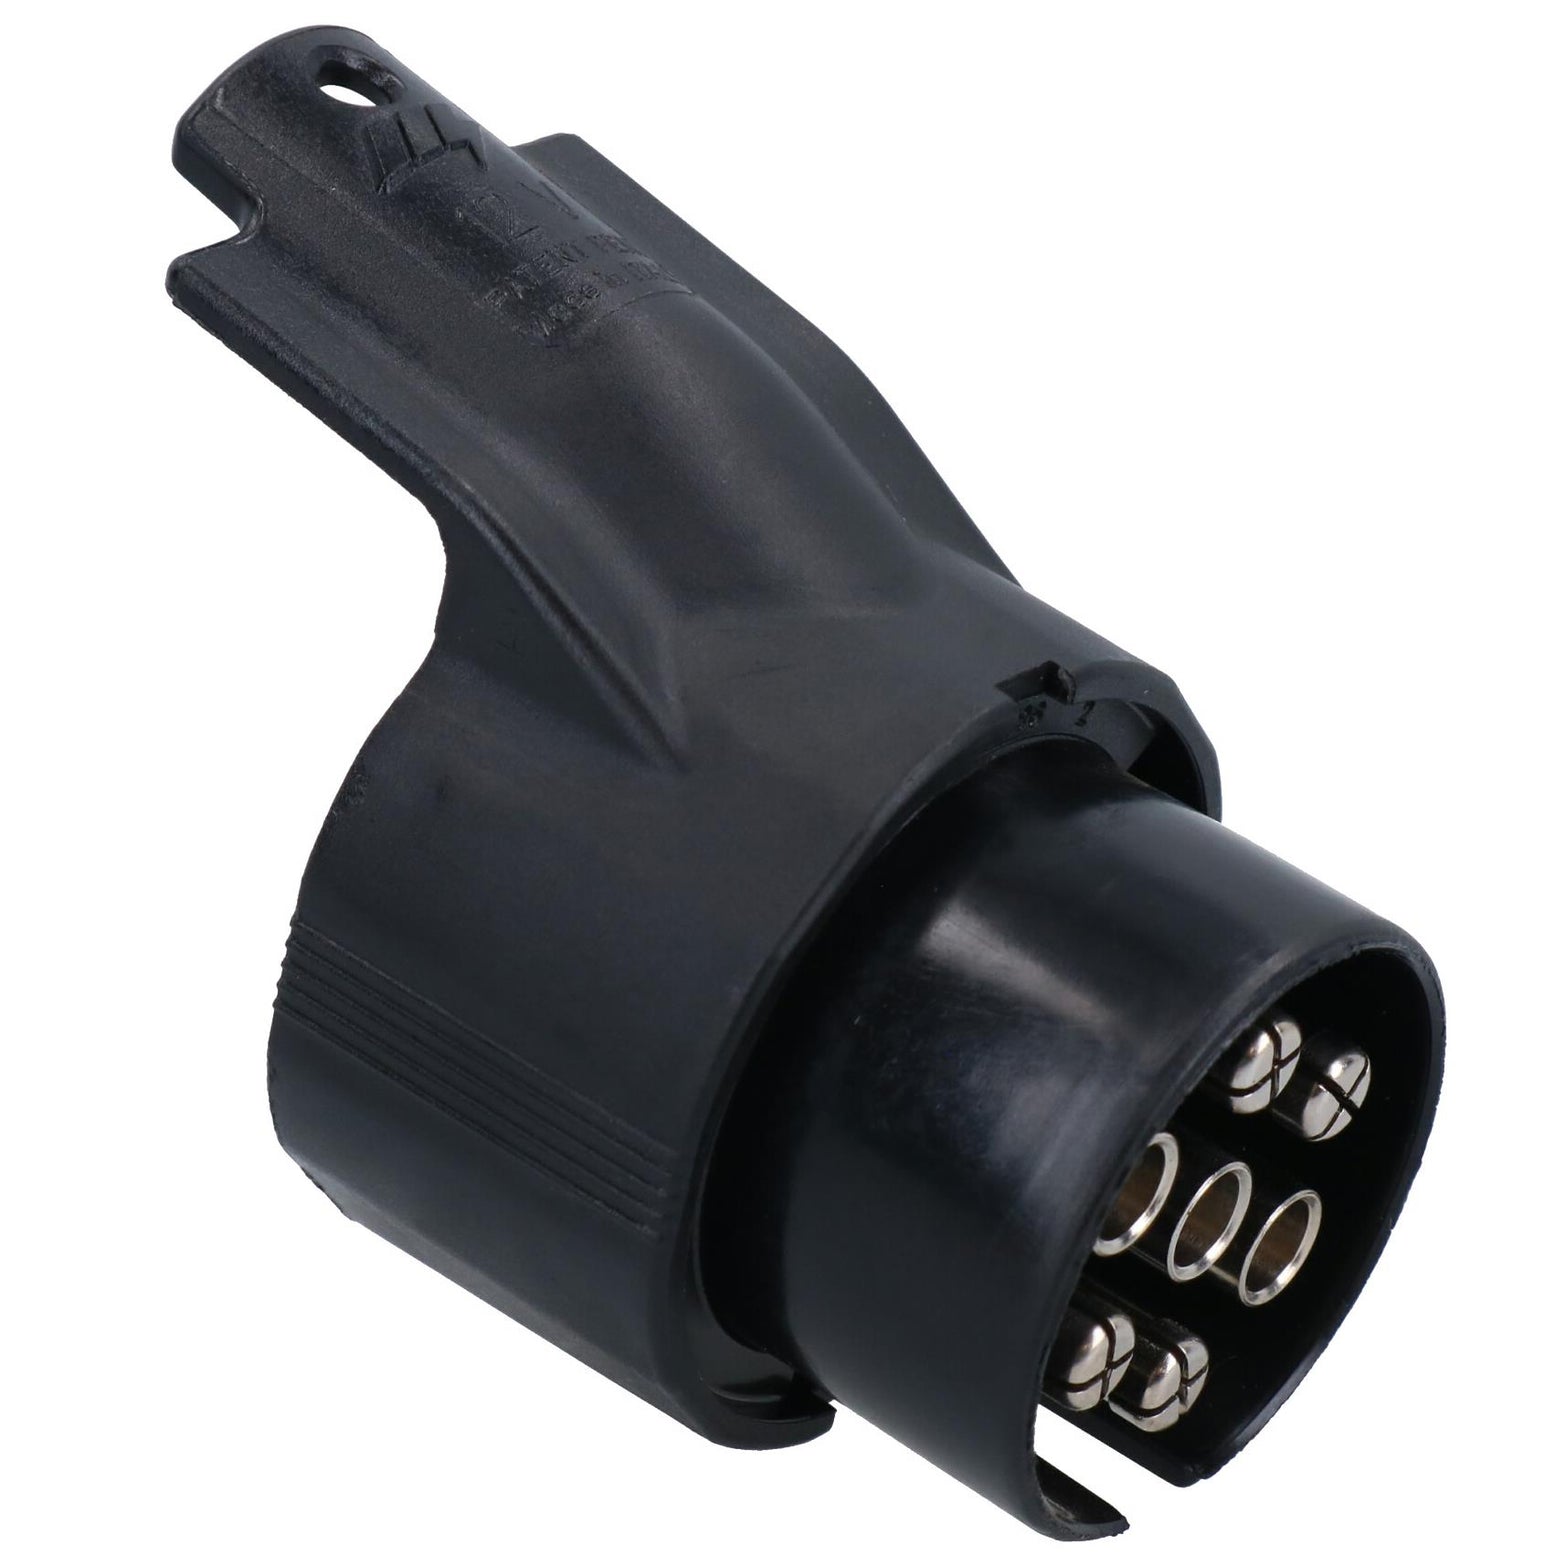 13 Pin Trailer Plug to 7 Pin Car Socket Wiring Adapter TR139